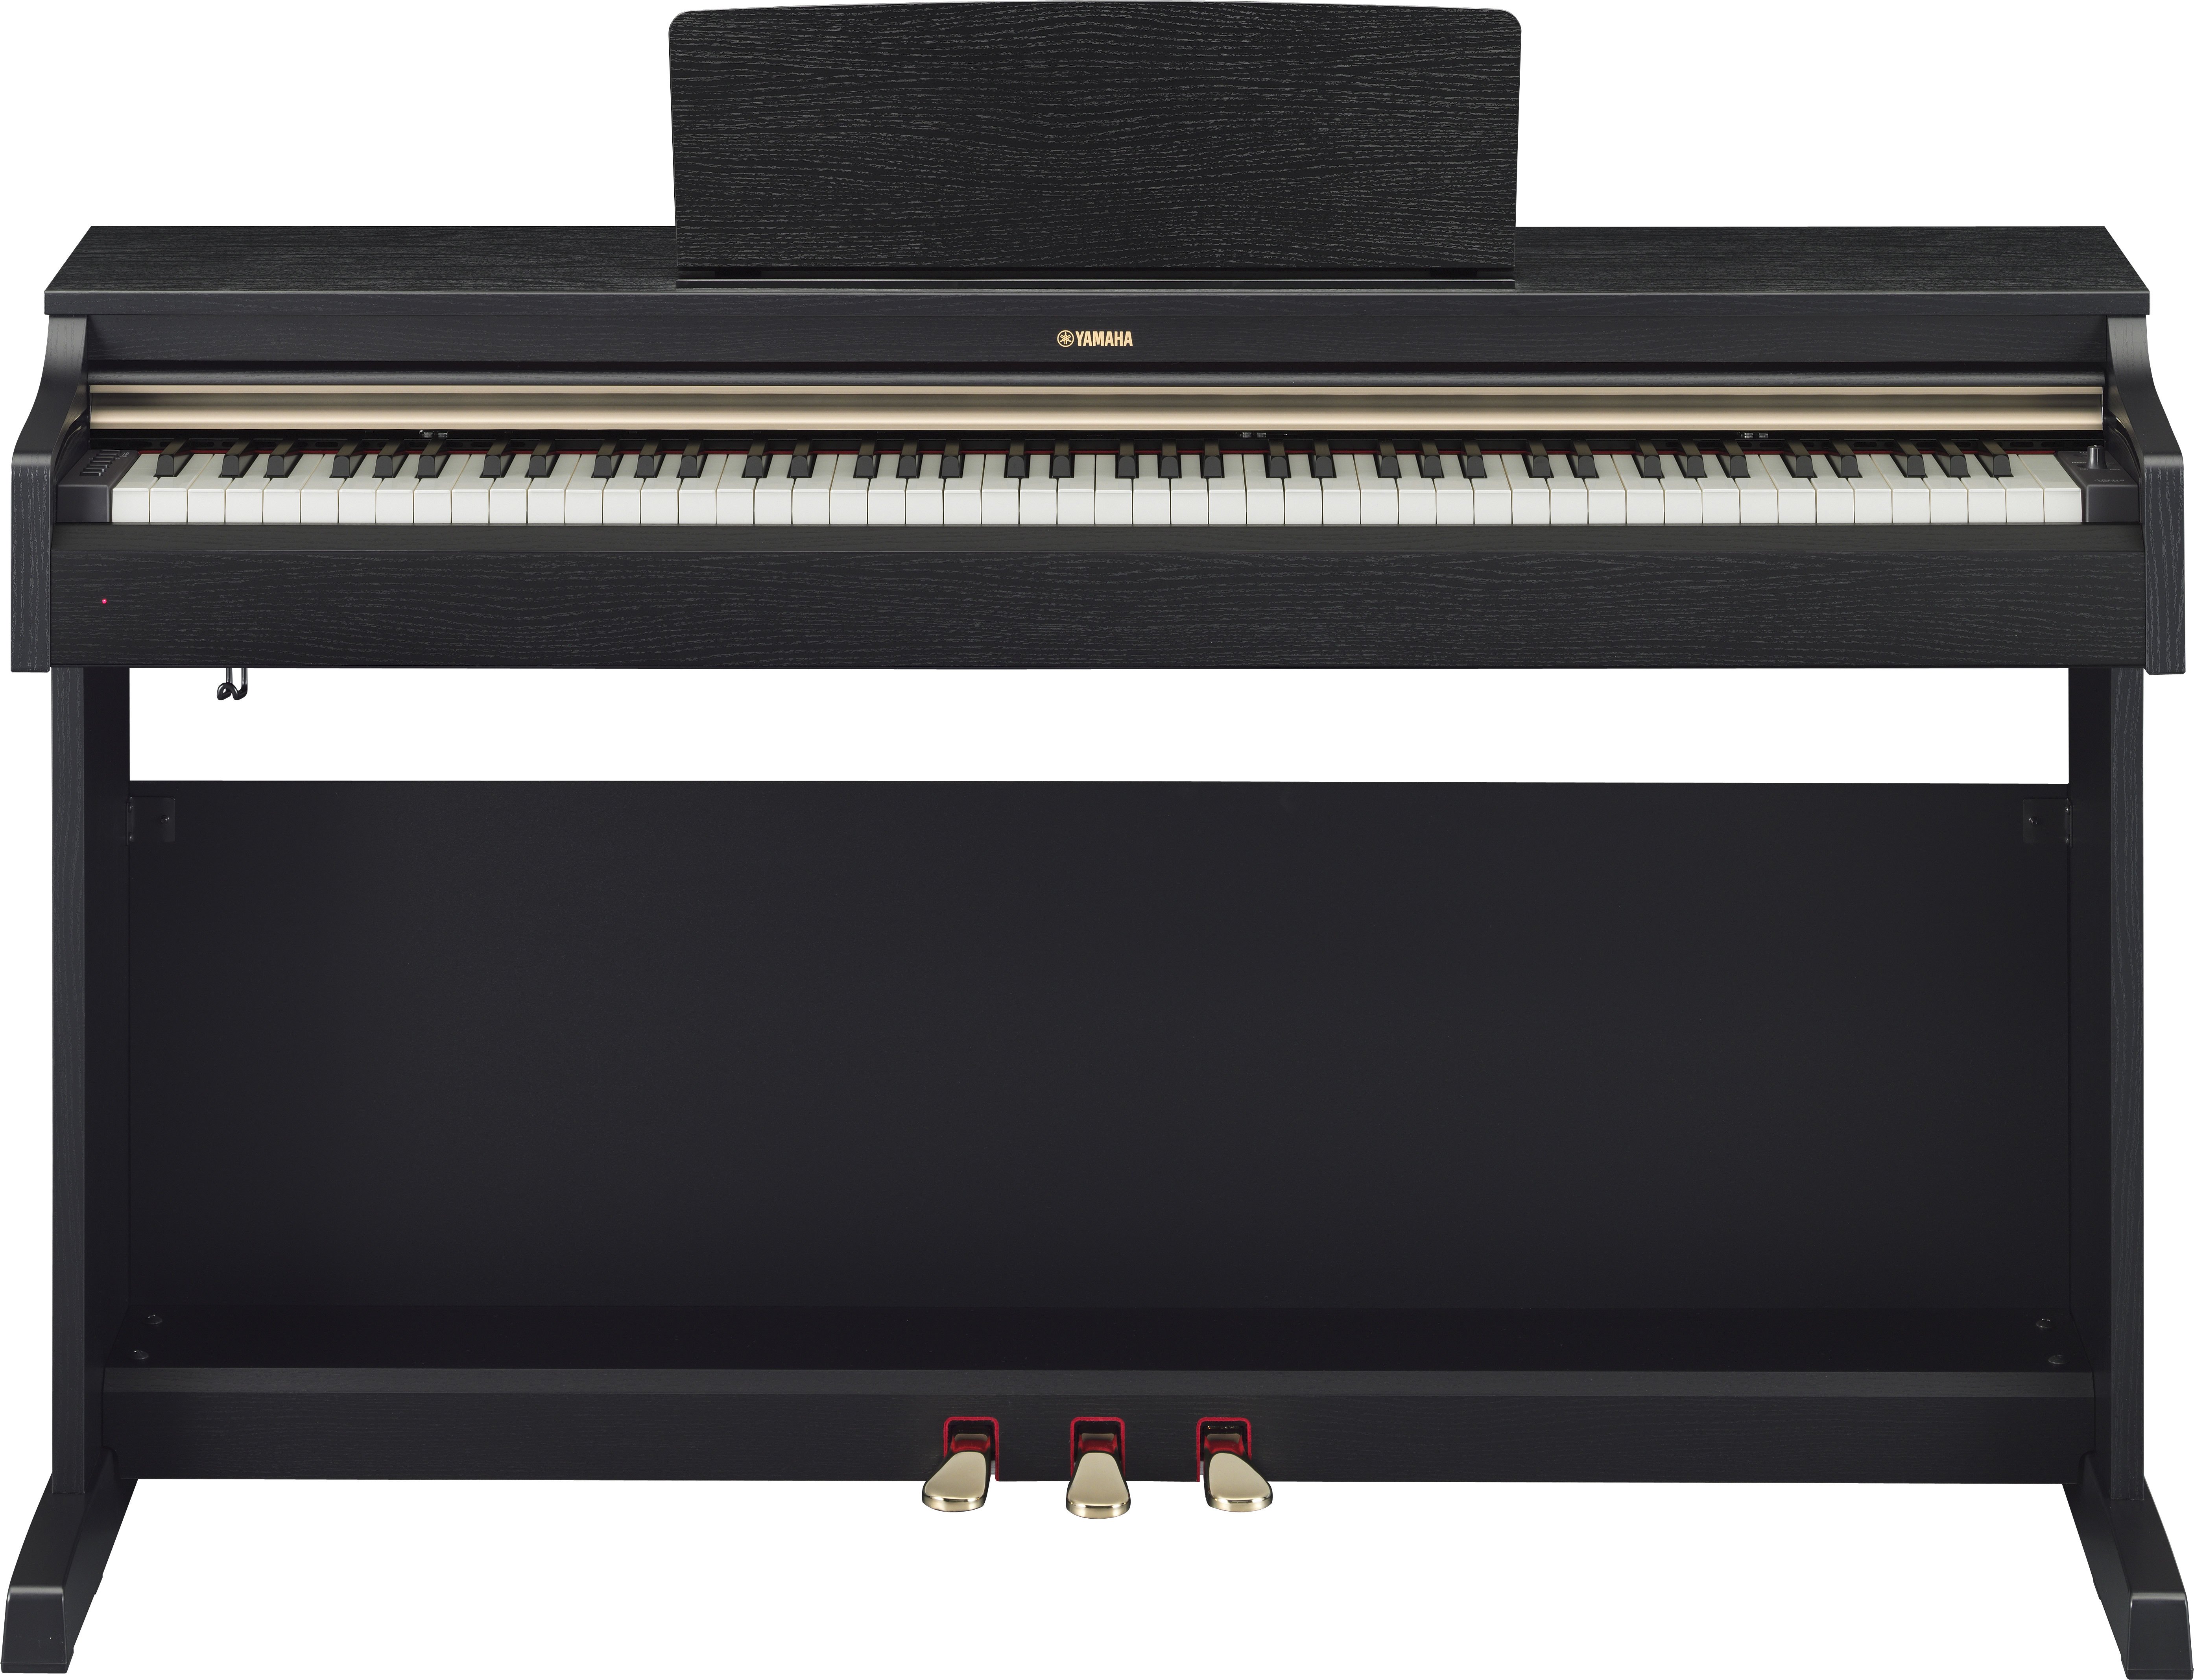 YDP-162 - Features - ARIUS - Pianos - Musical Instruments ...